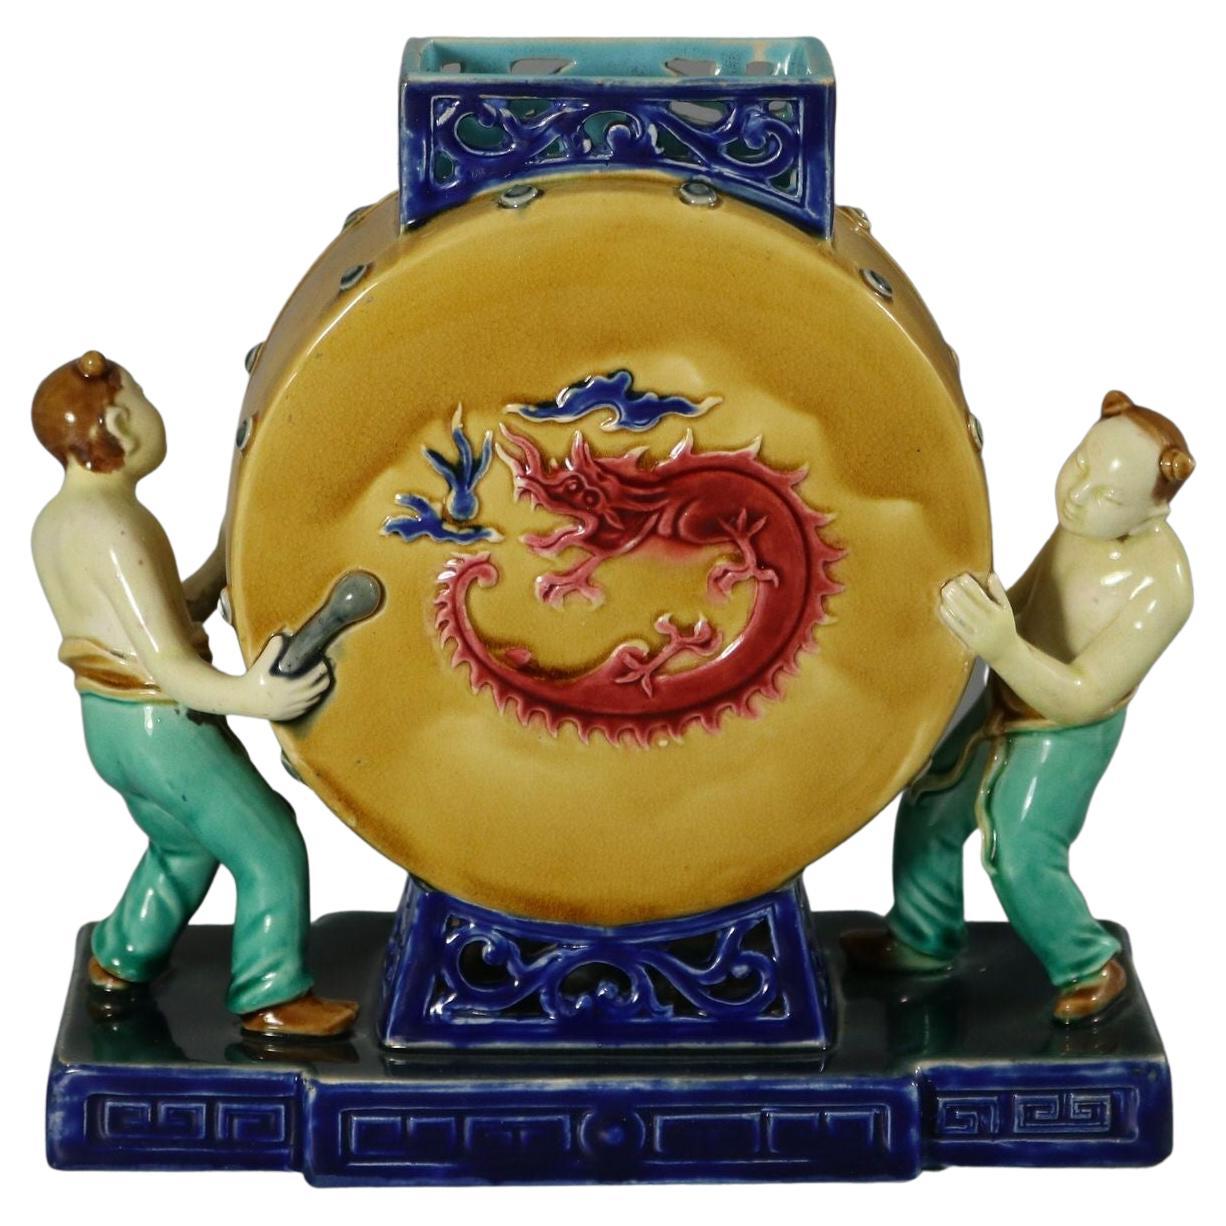 Seltene Minton Majolika-Trommelvase aus chinesischer Keramik